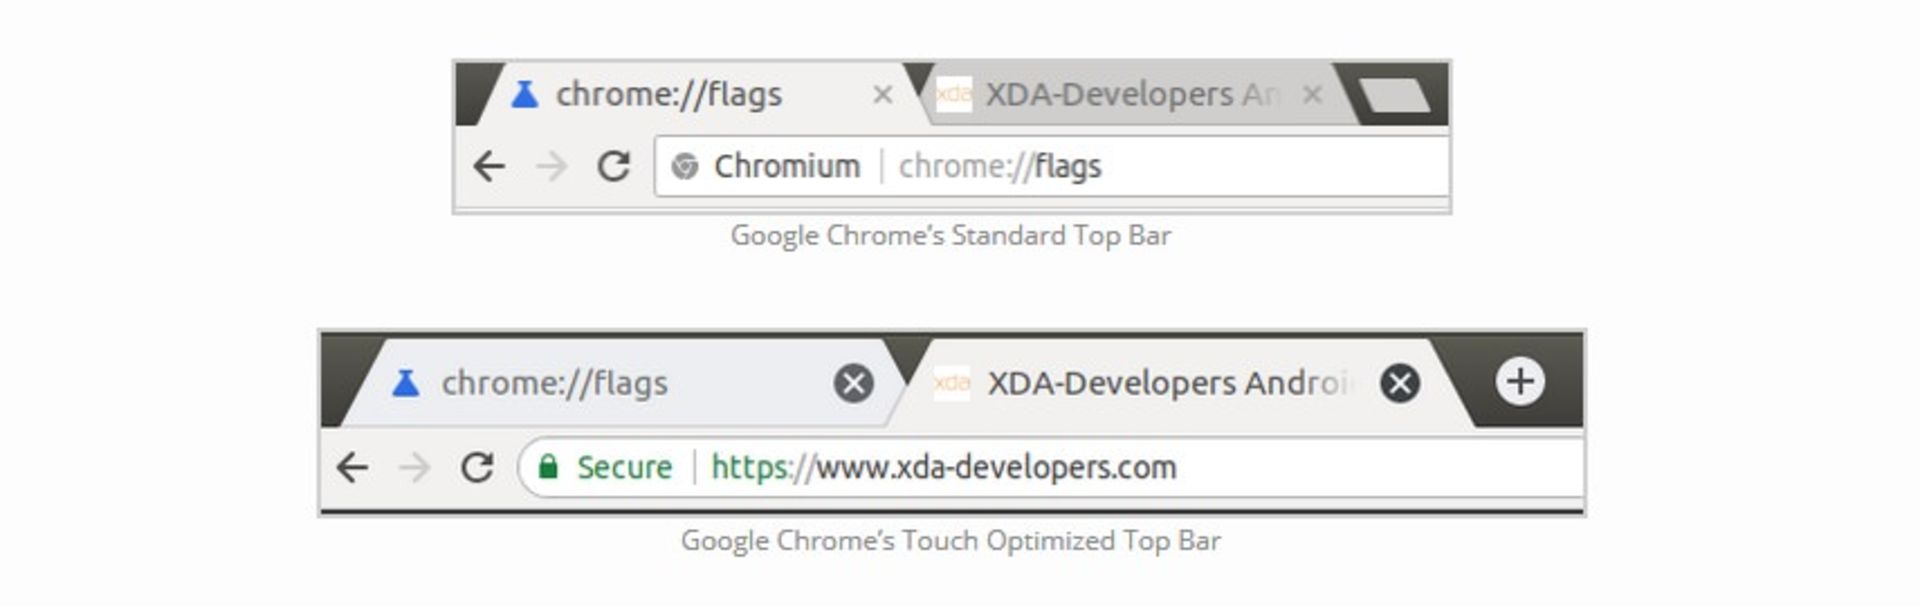 Google Chrome Top Bar